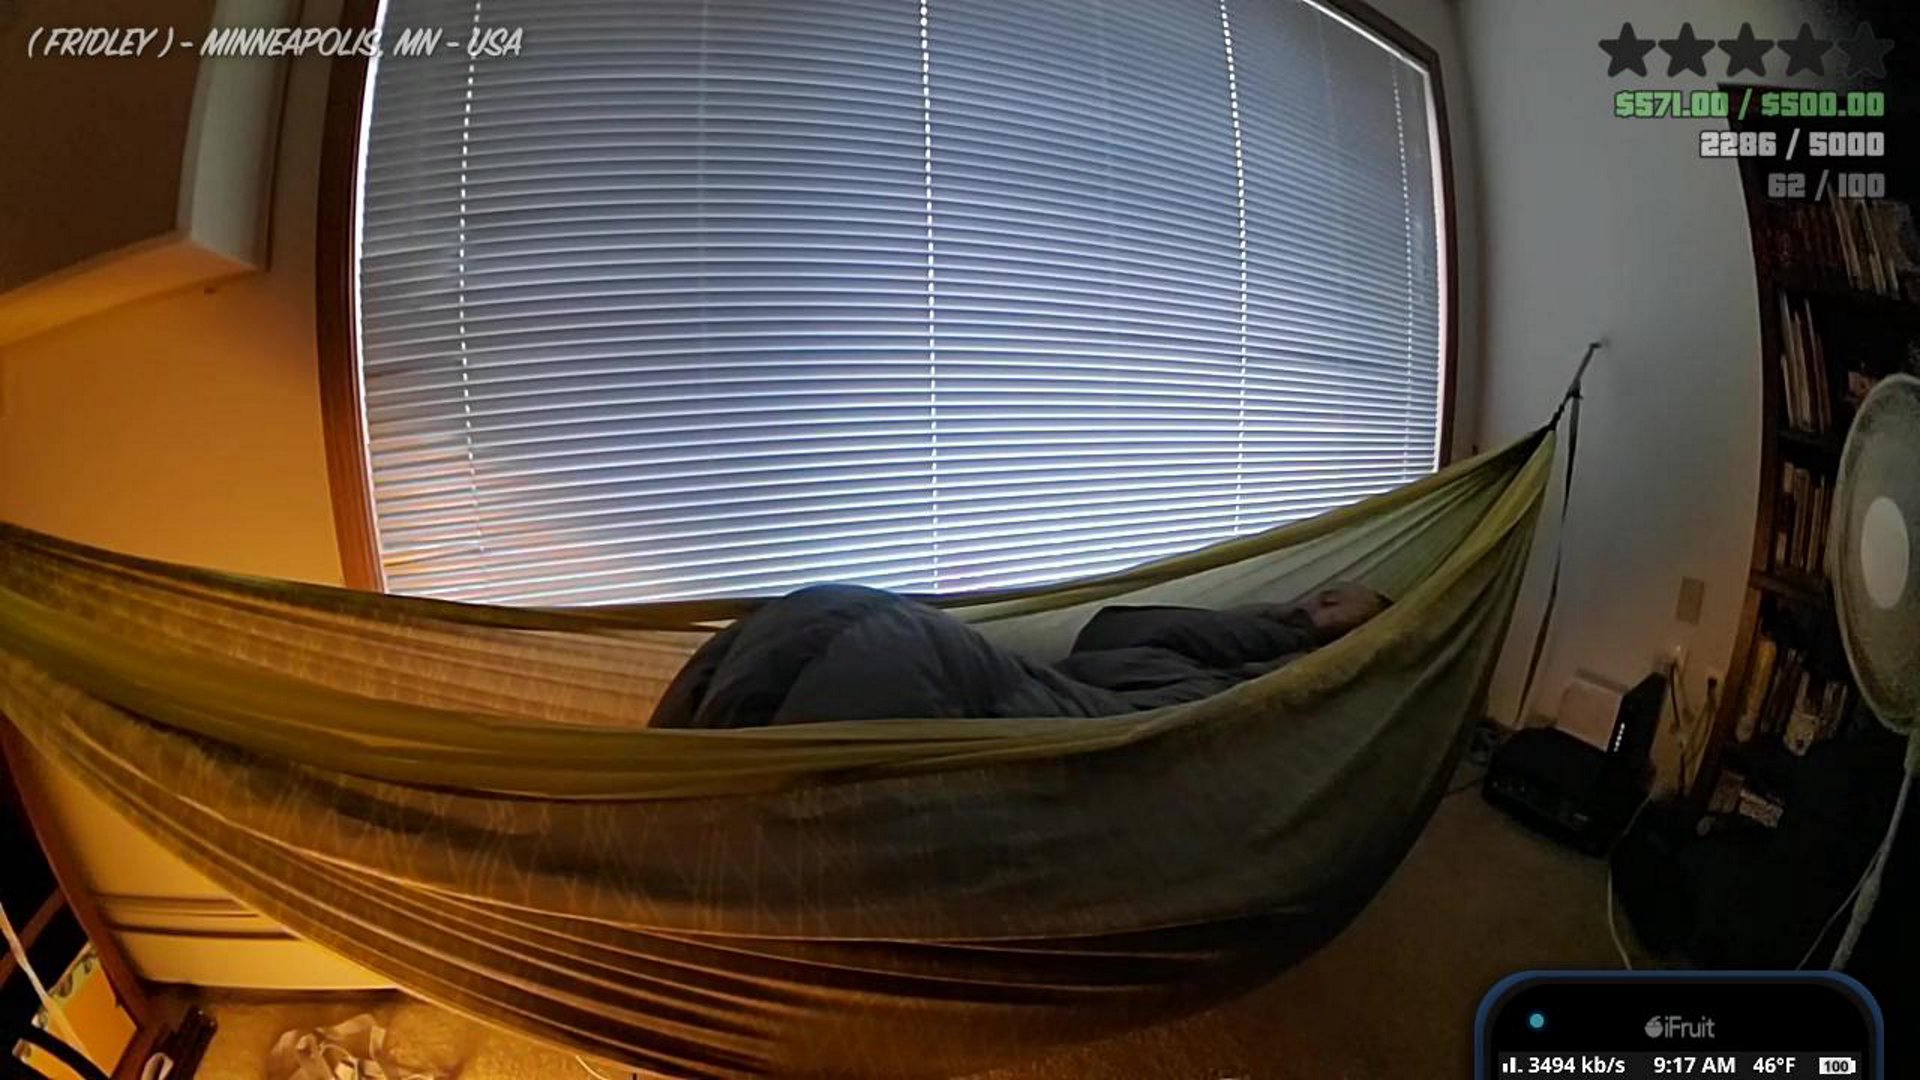 hammock-sleep-stream-discord-bttv-sub-donate-luv-none-0904-https-t-co-vmgxid3kic-https-t-co-eh51yvqsbe